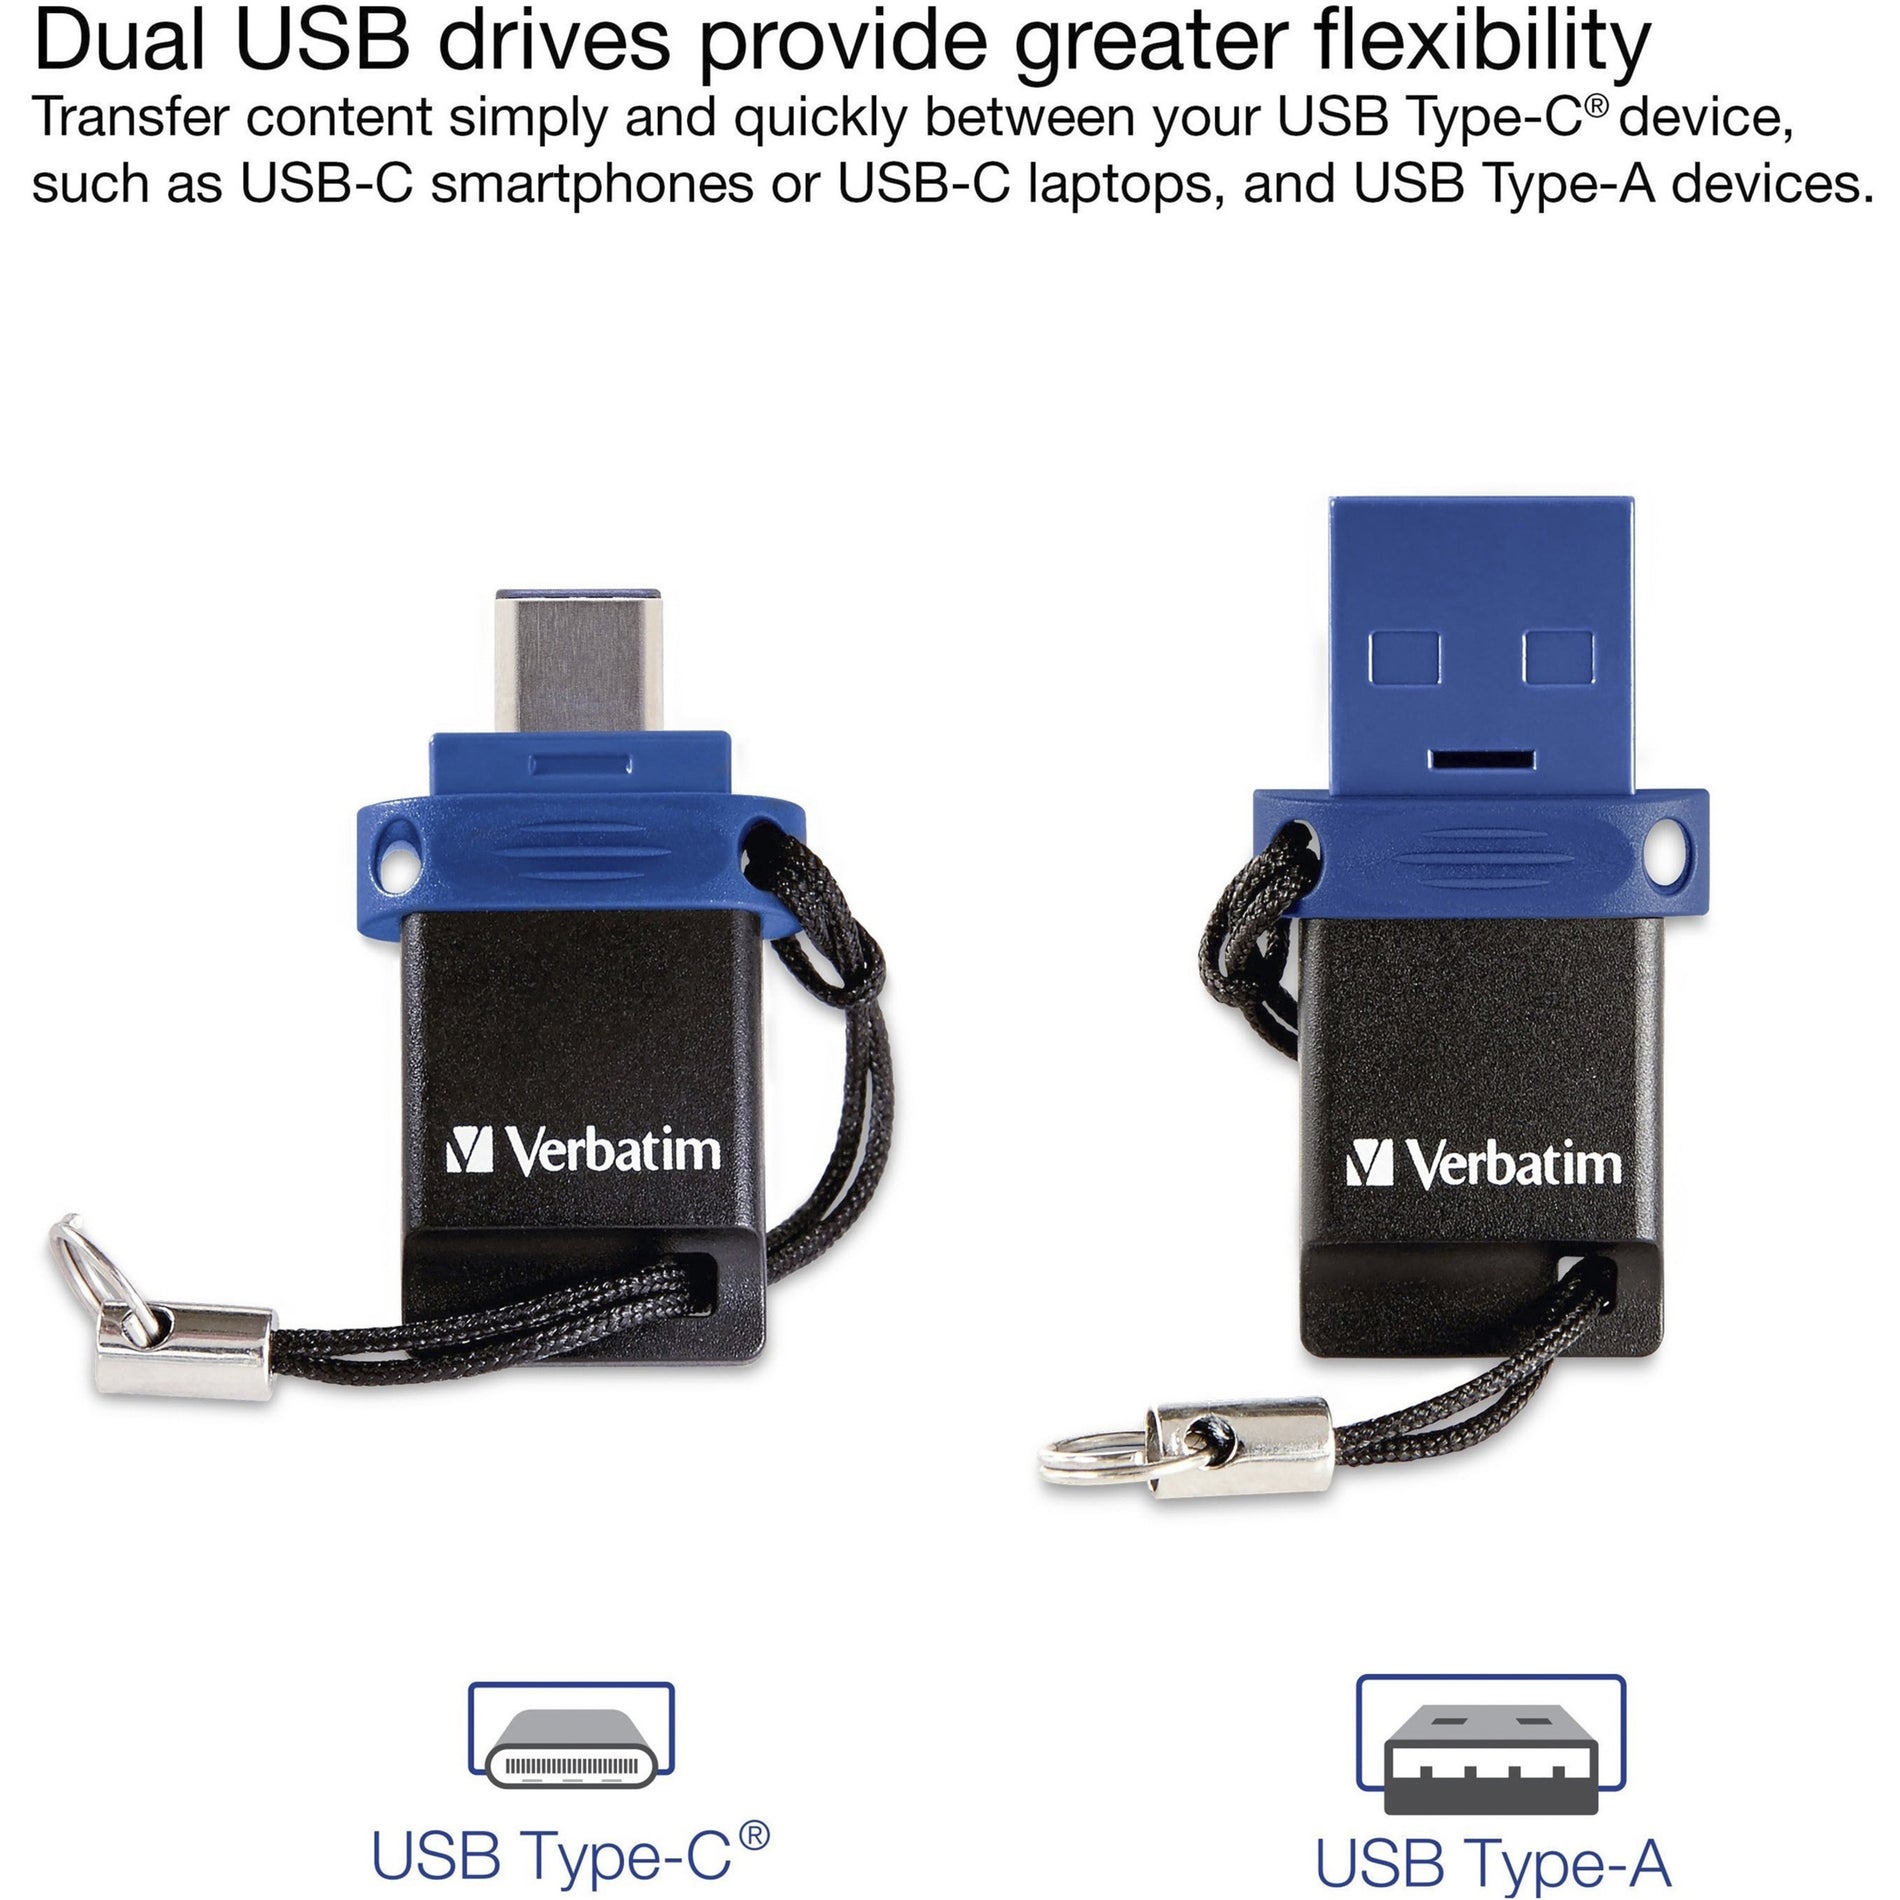 微查汶(Microban)、蓝色(Blue)、存储存放 (Store 'n' Go)、双USB 3.2 Gen 1 闪存驱动器(Dual USB 3.2 Gen 1 Flash Drive)、16GB